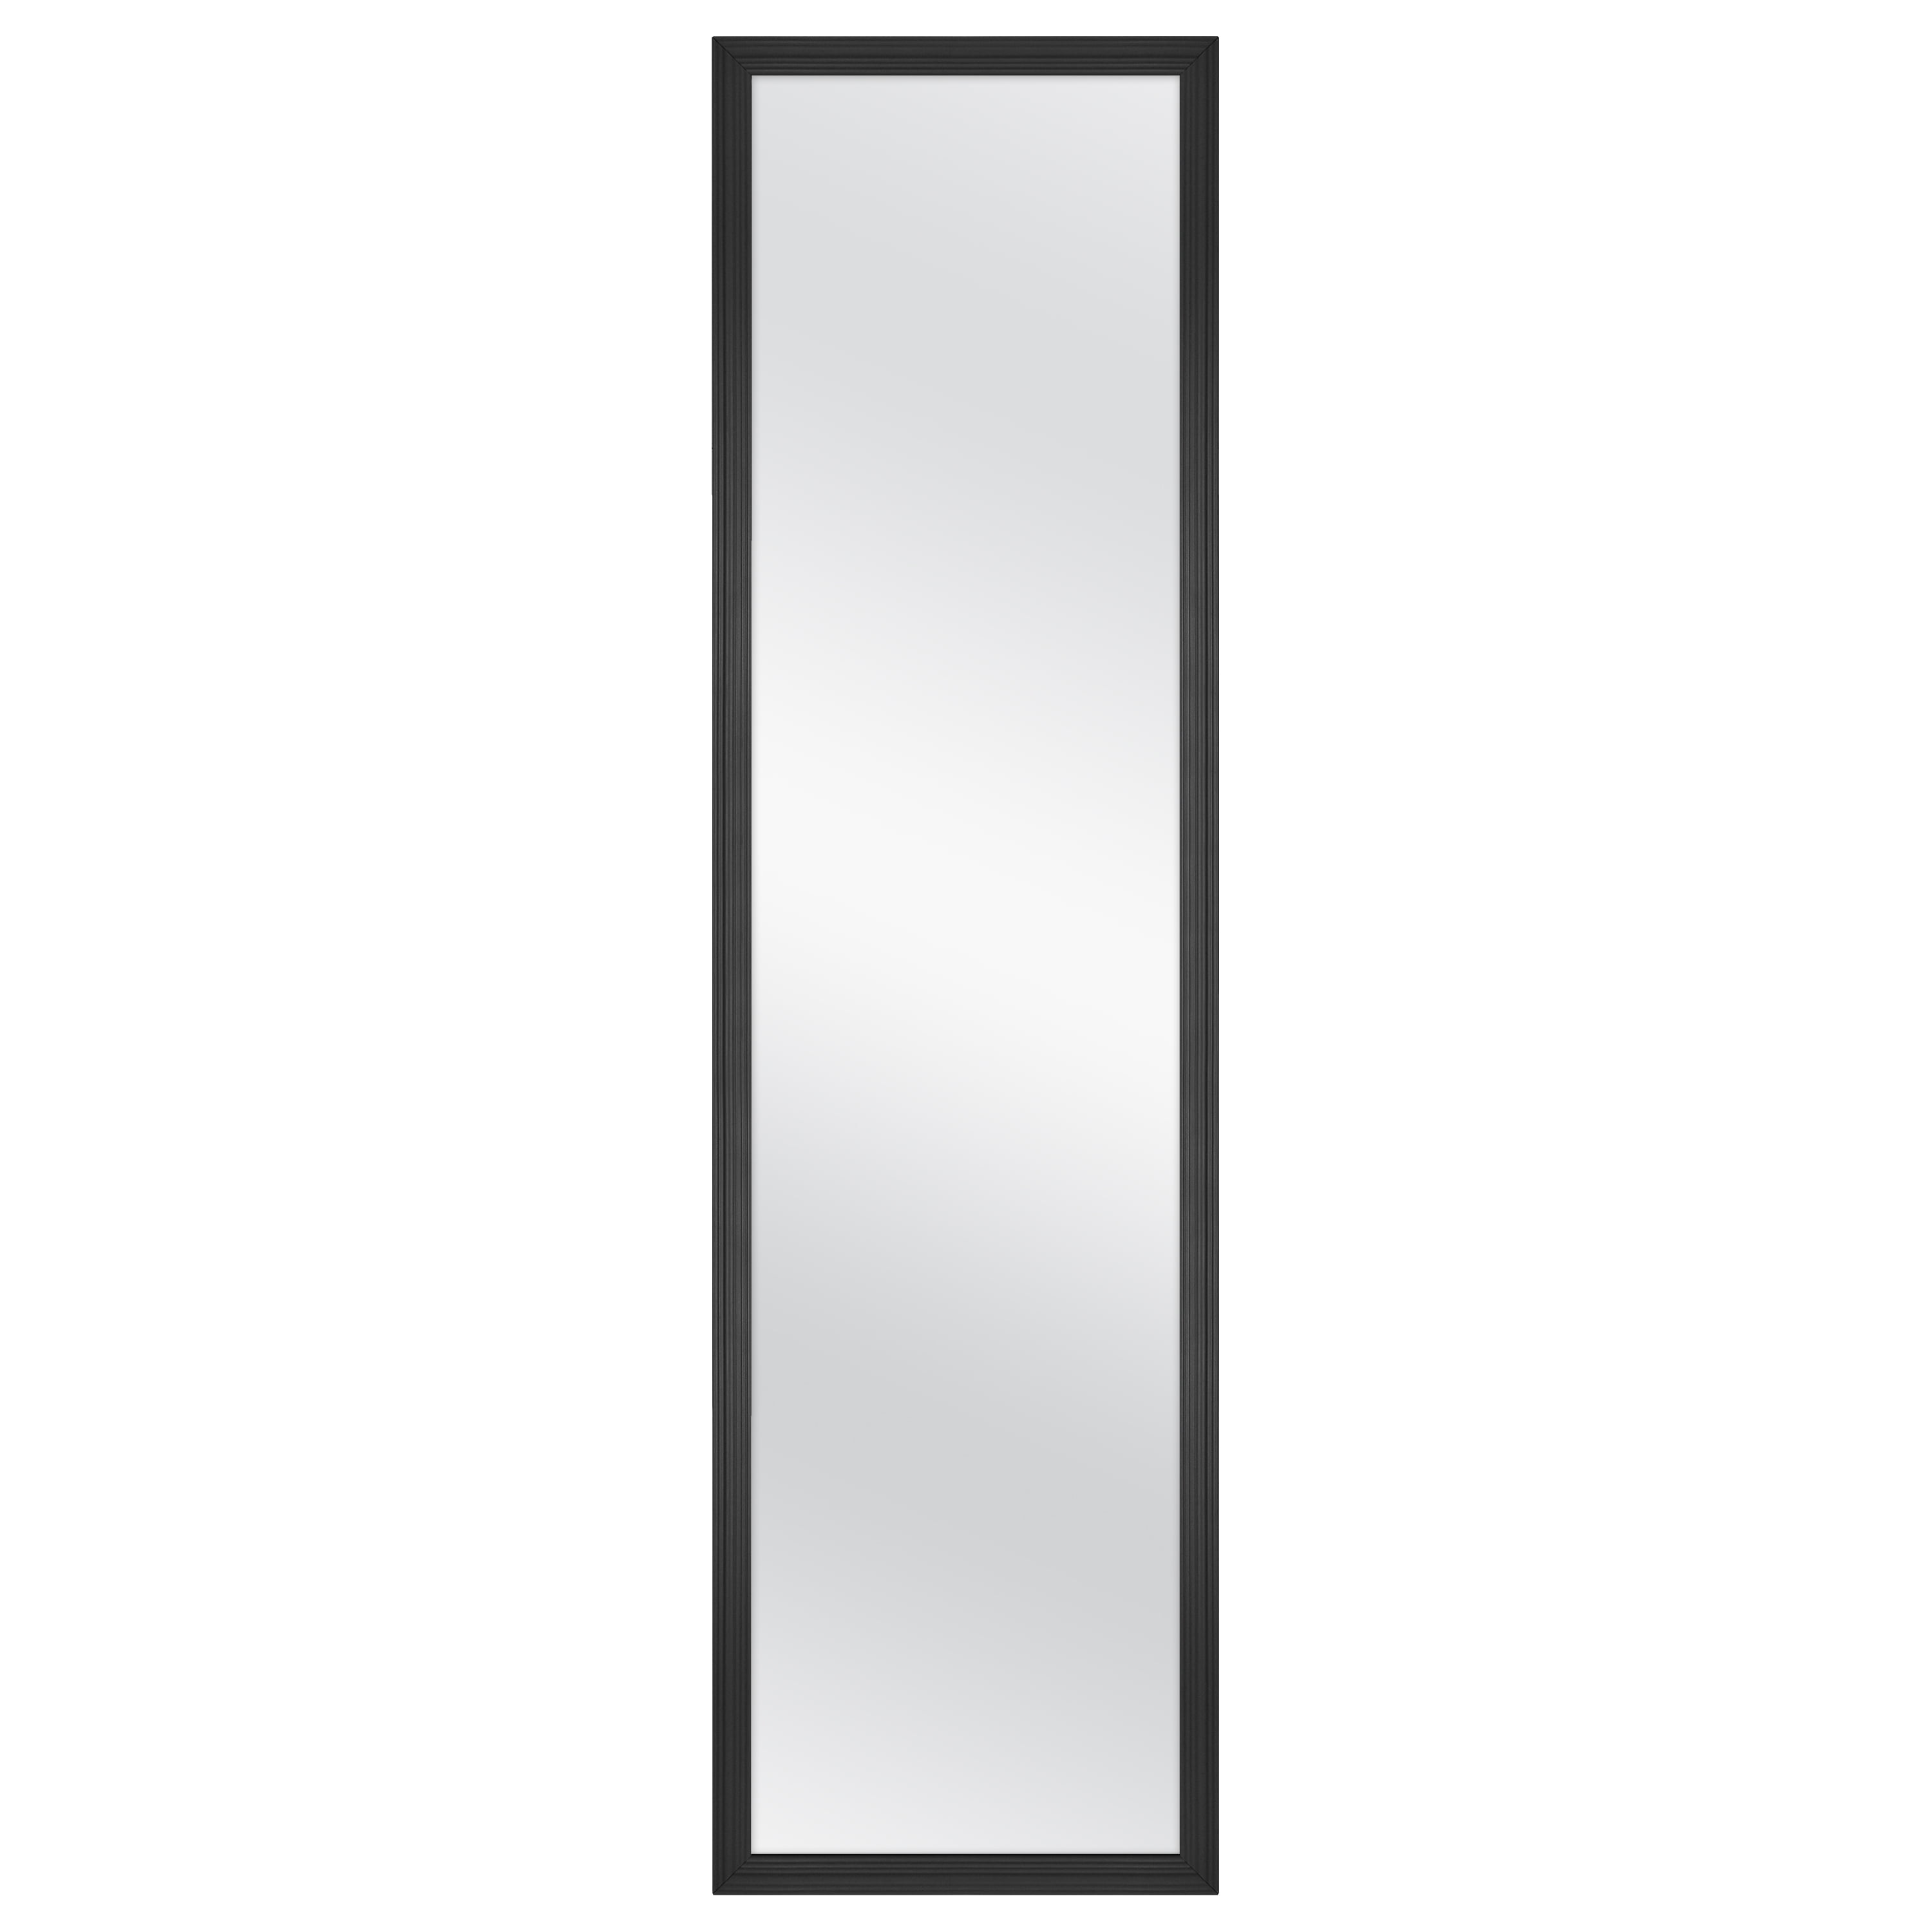 Mainstays Door Mirror, 13.38IN X 49.38IN, Black Finish